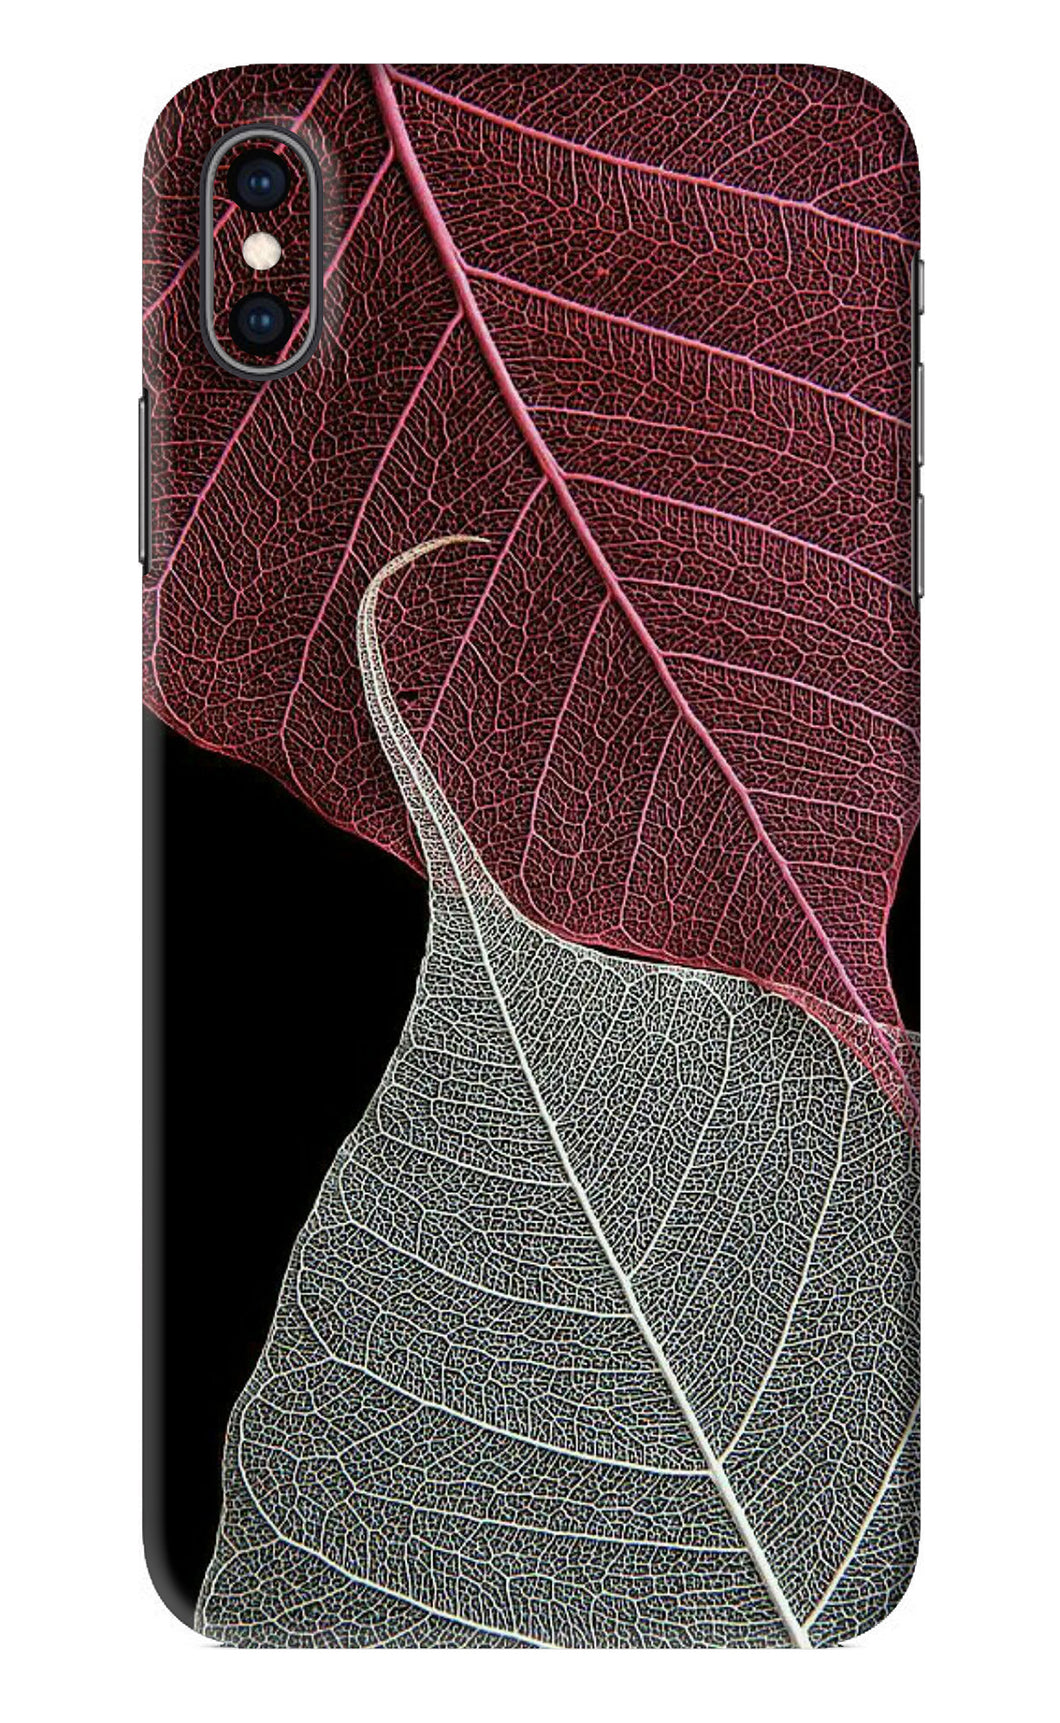 Leaf Pattern iPhone XS Max Back Skin Wrap